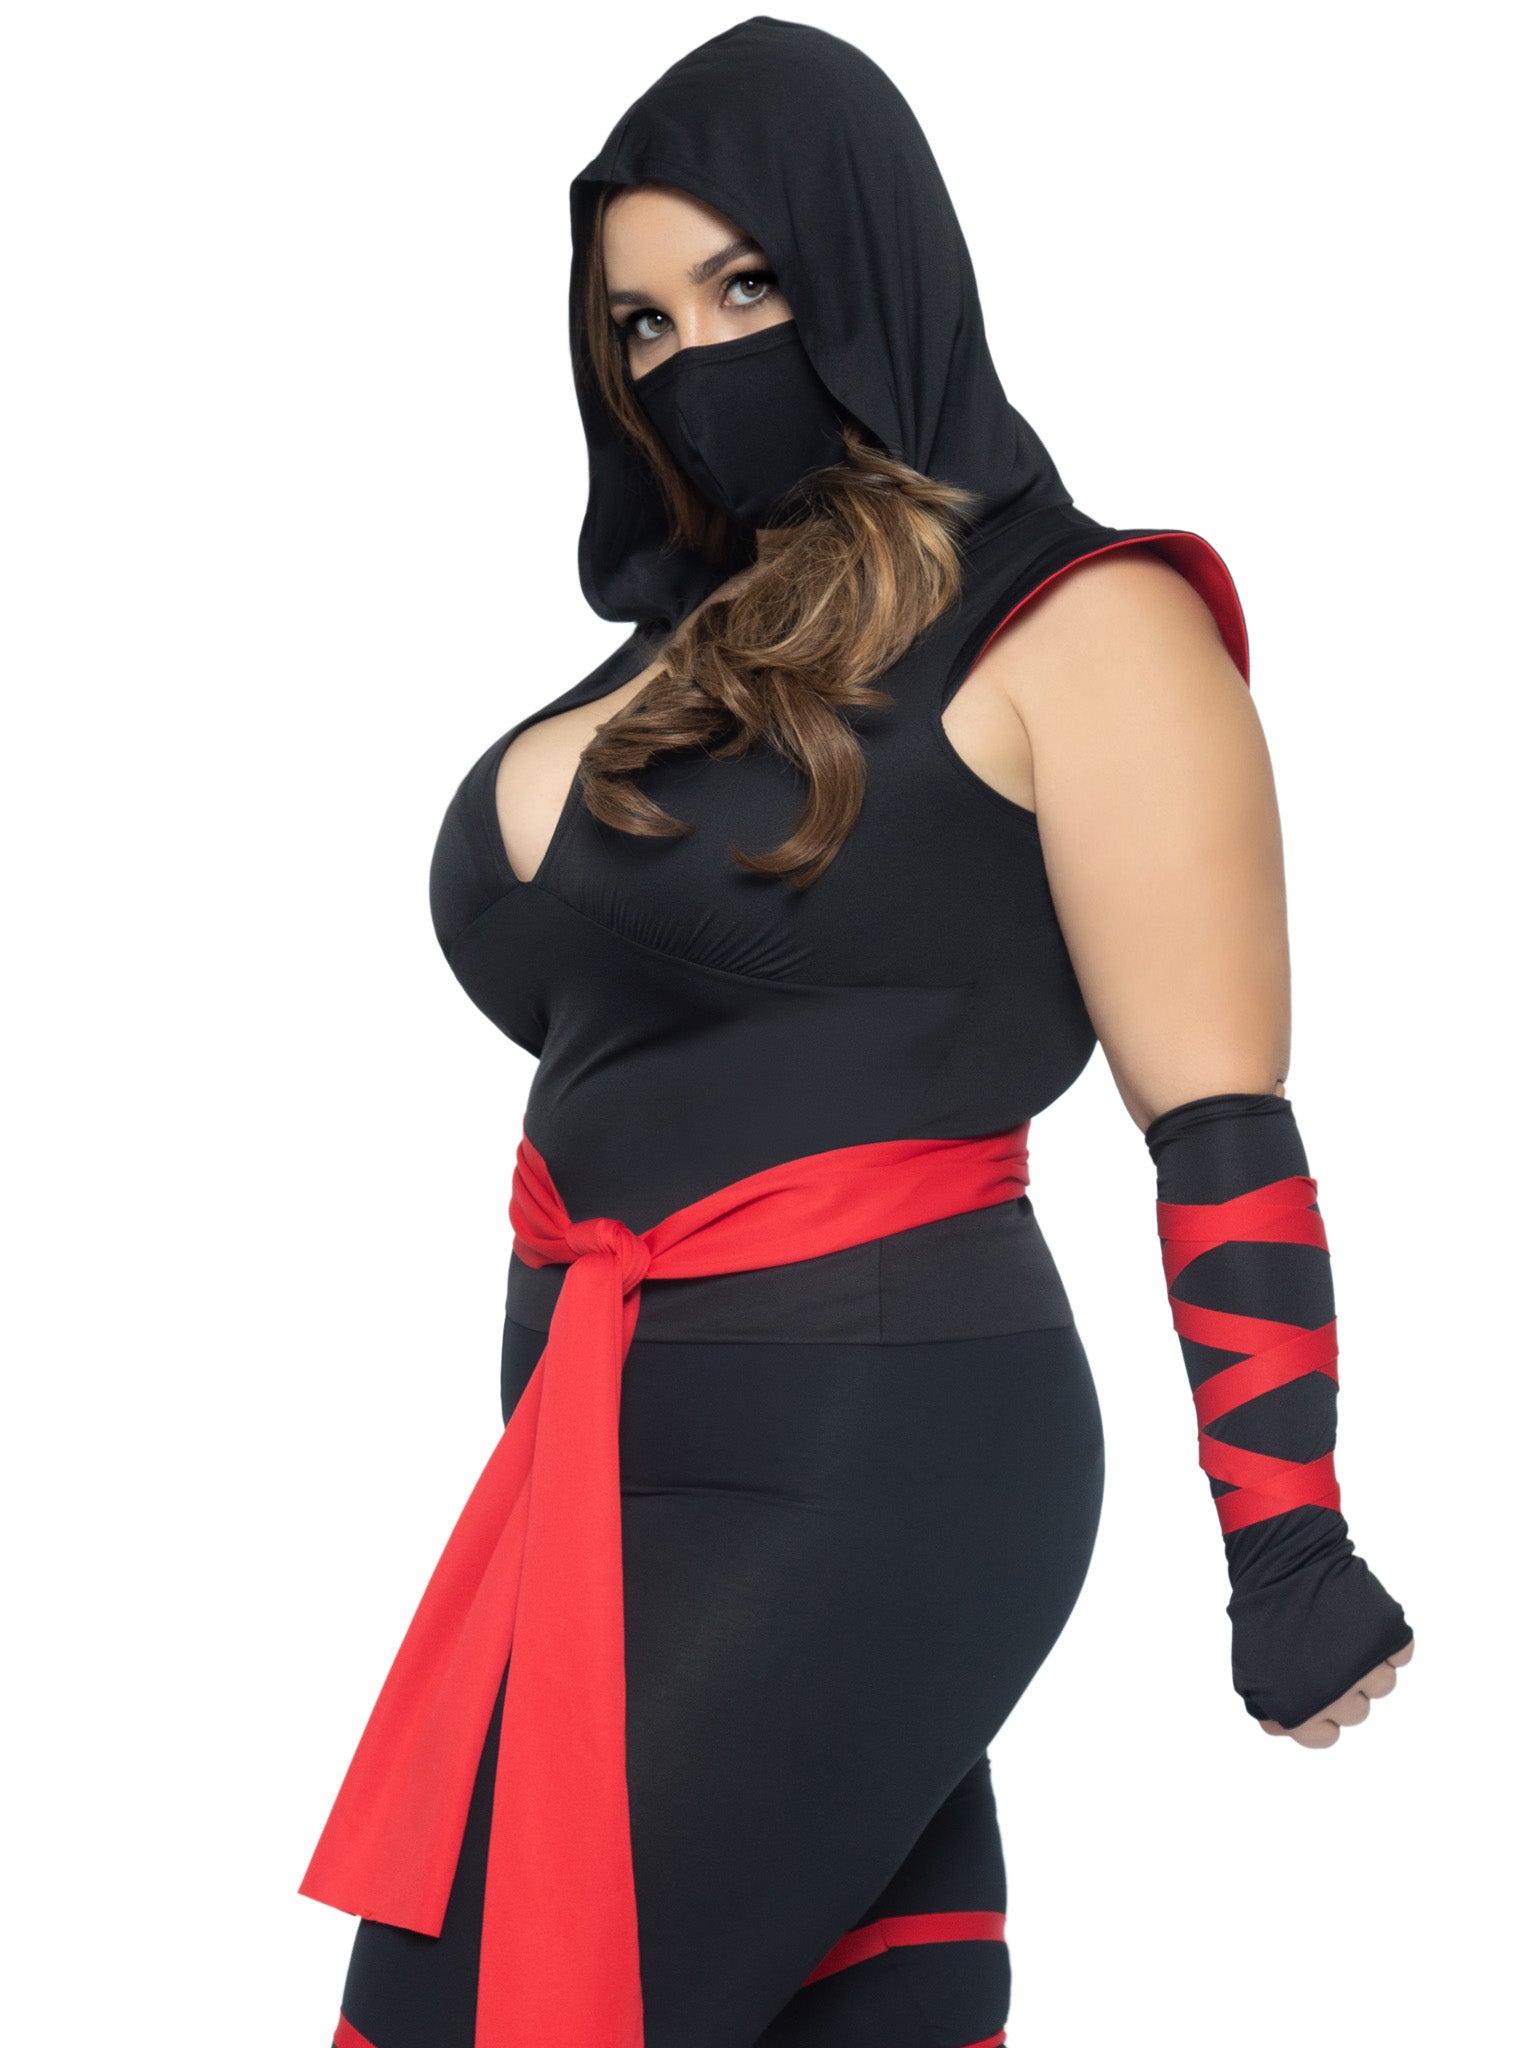 Deadly Ninja Costume, Women's Plus Size Costumes | Leg Avenue